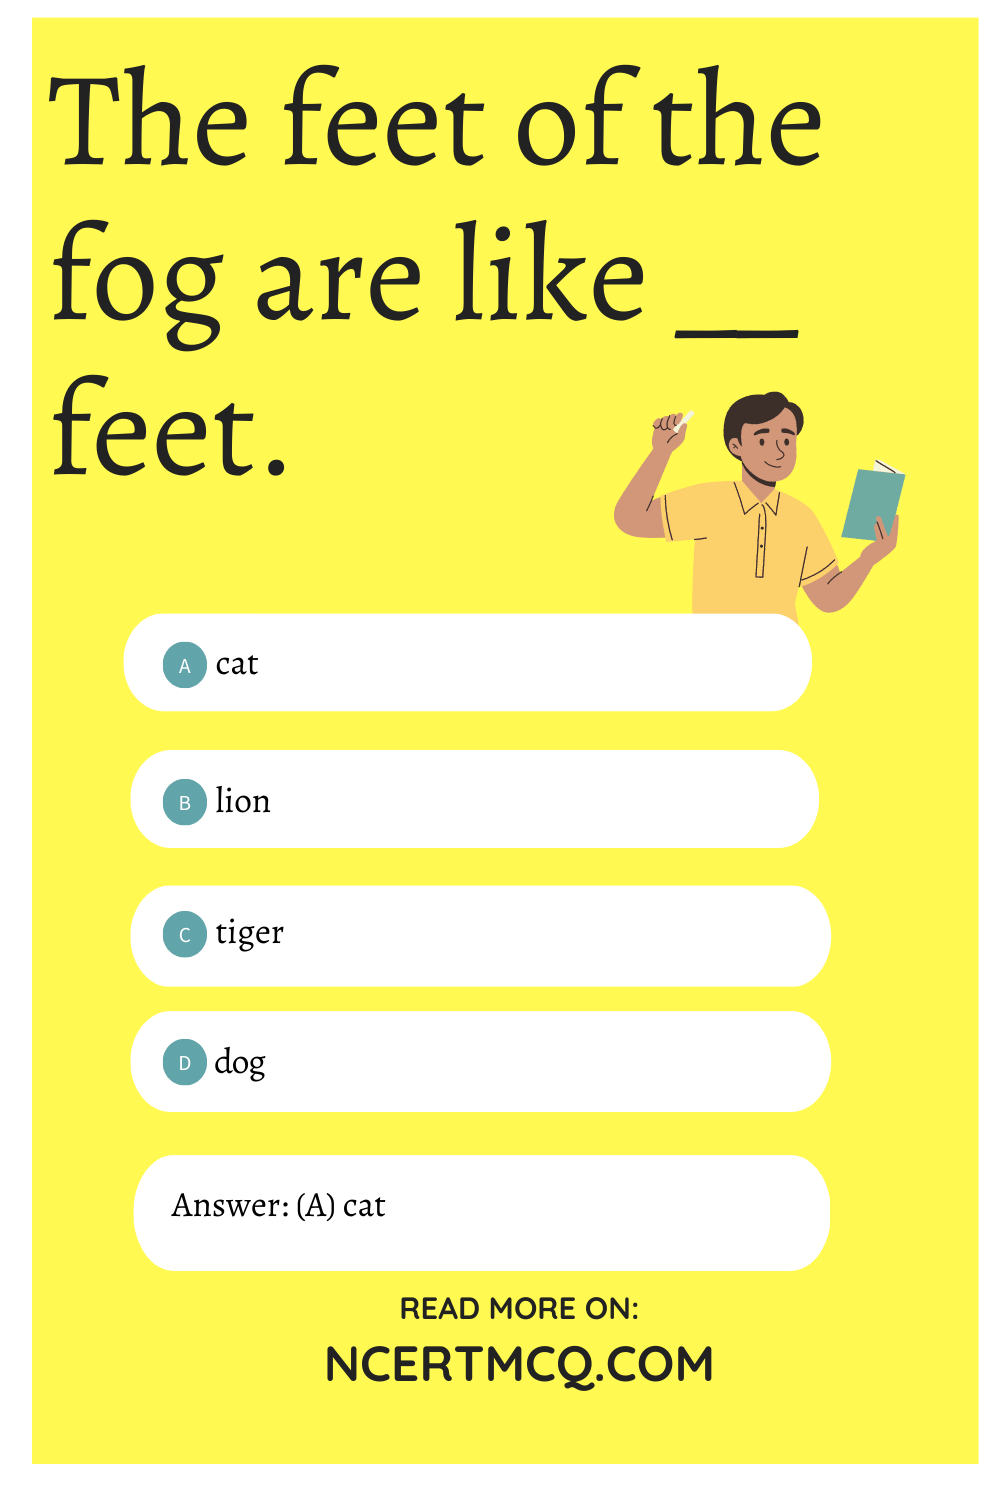 The feet of the fog are like __ feet.